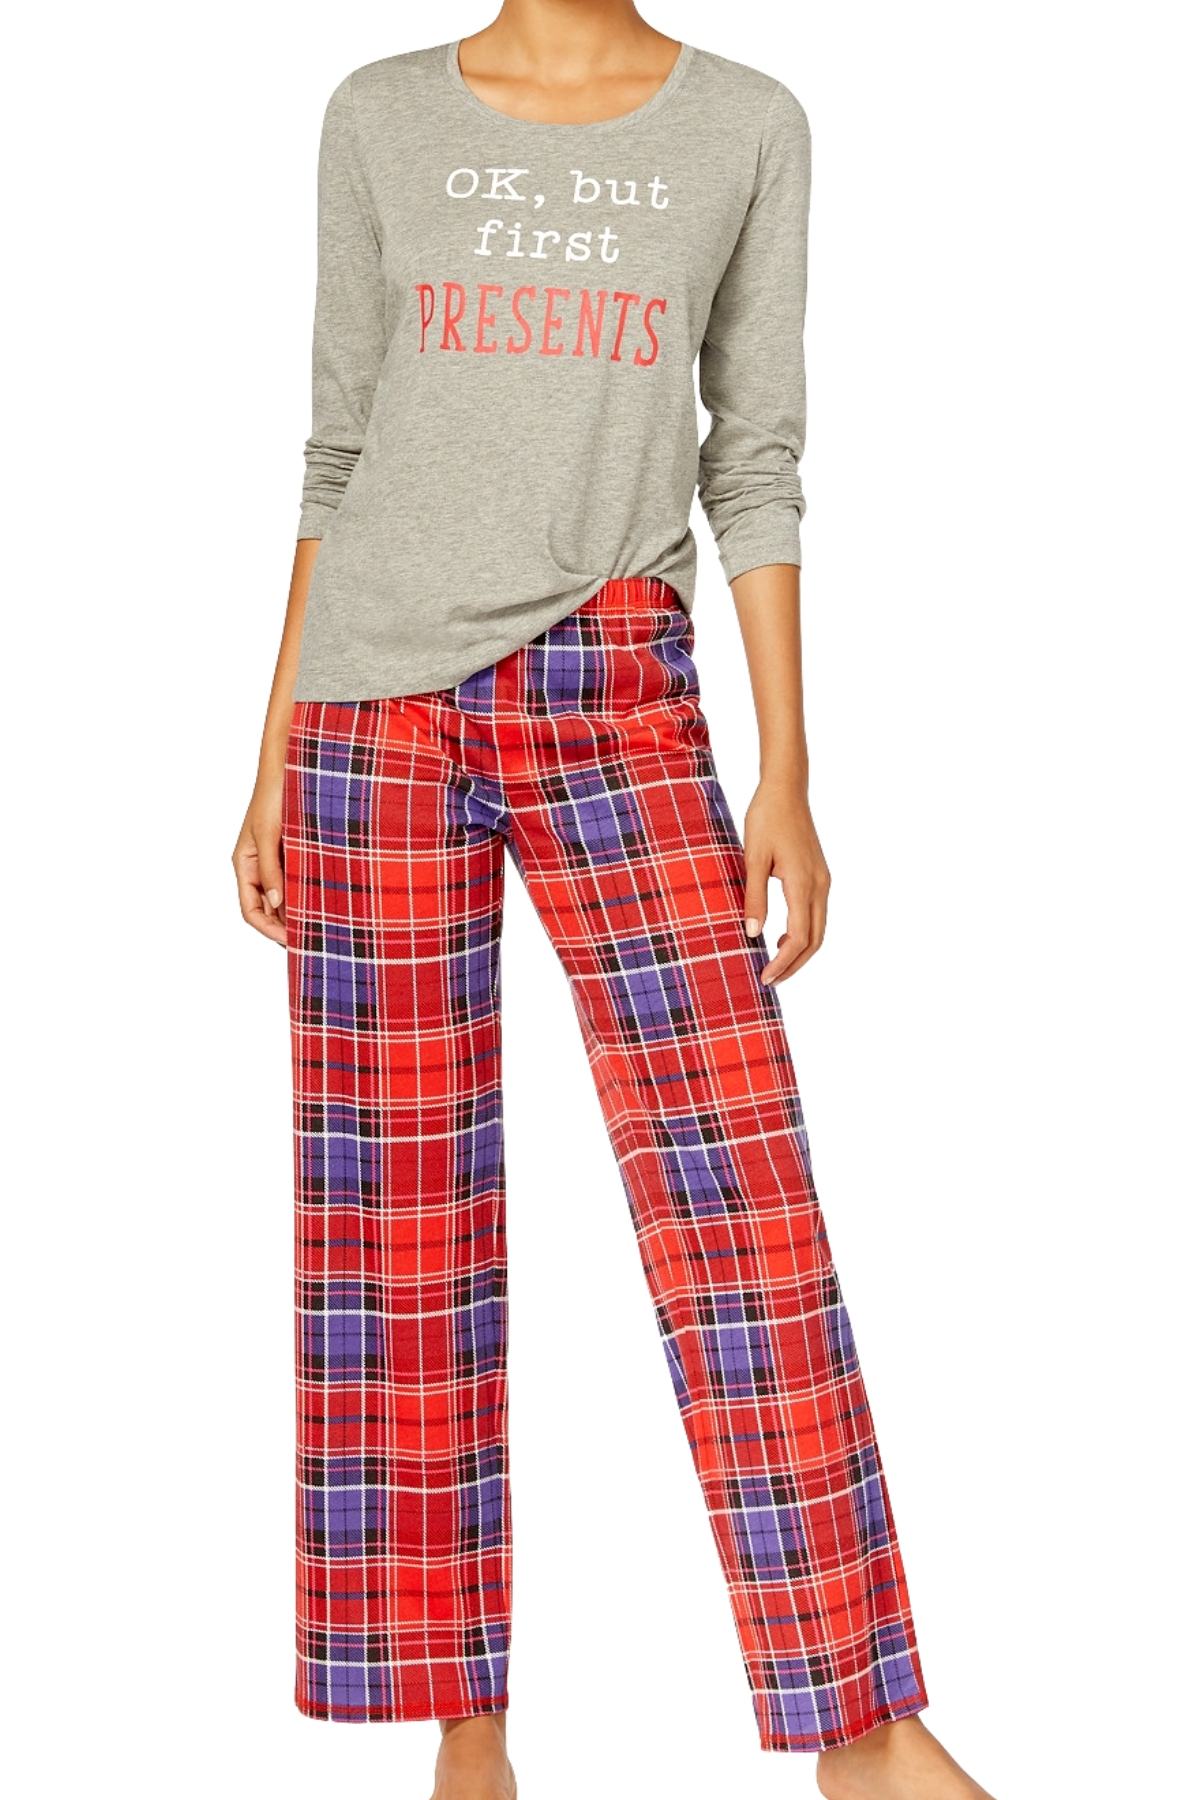 Jenni By Jennifer Moore Holiday-Plaid Knit Top & Printed Pant Pajama Set